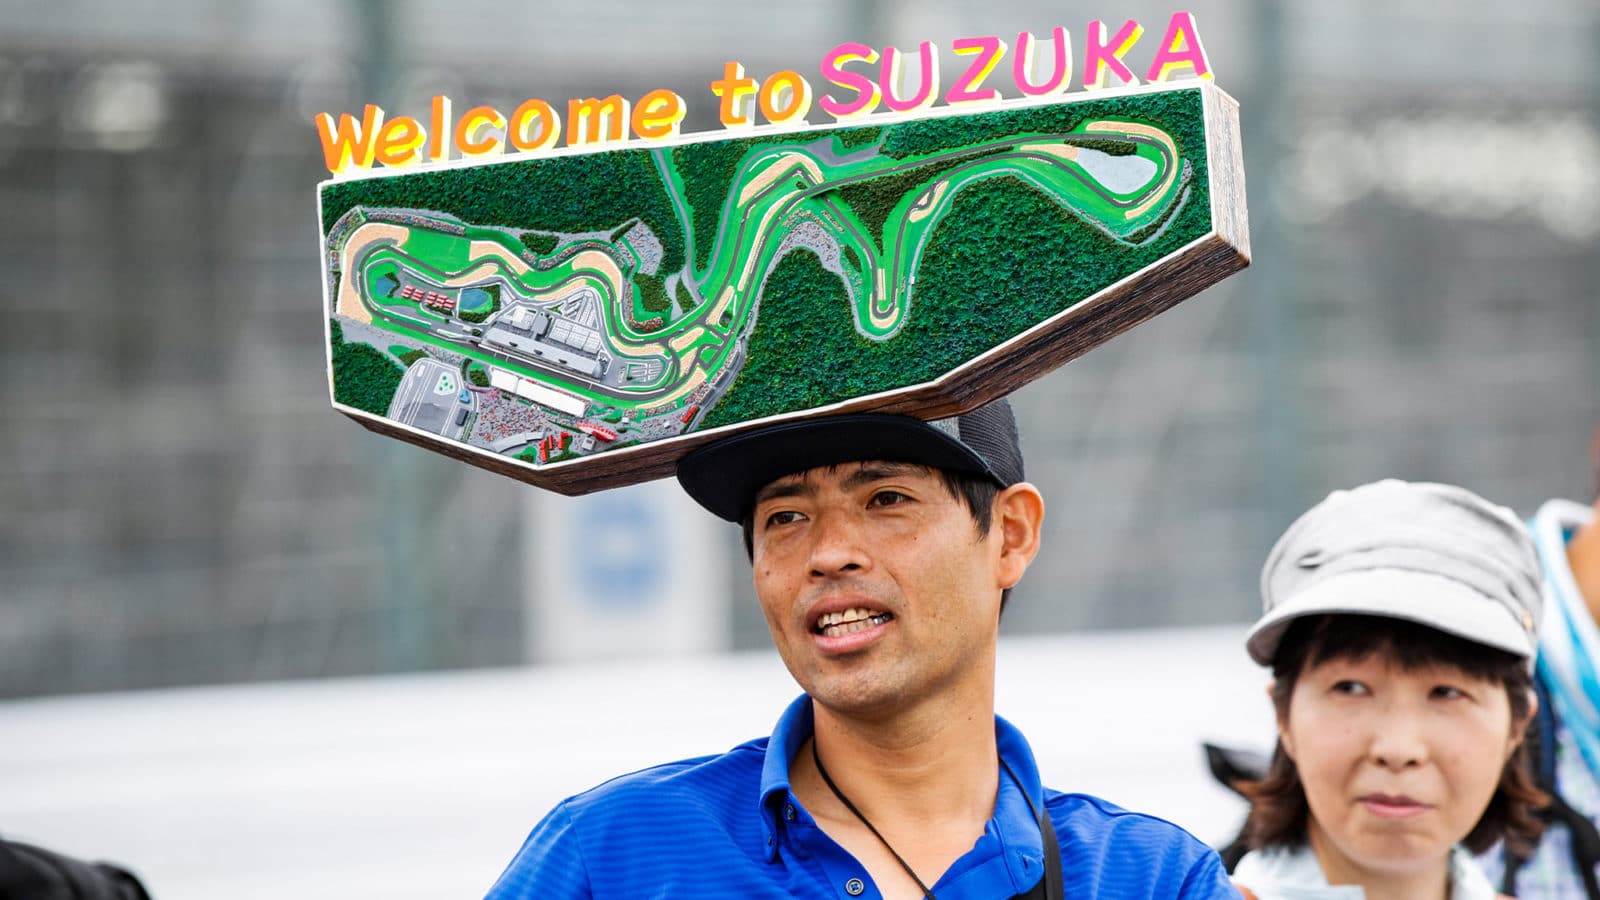 Suzuka track map hat